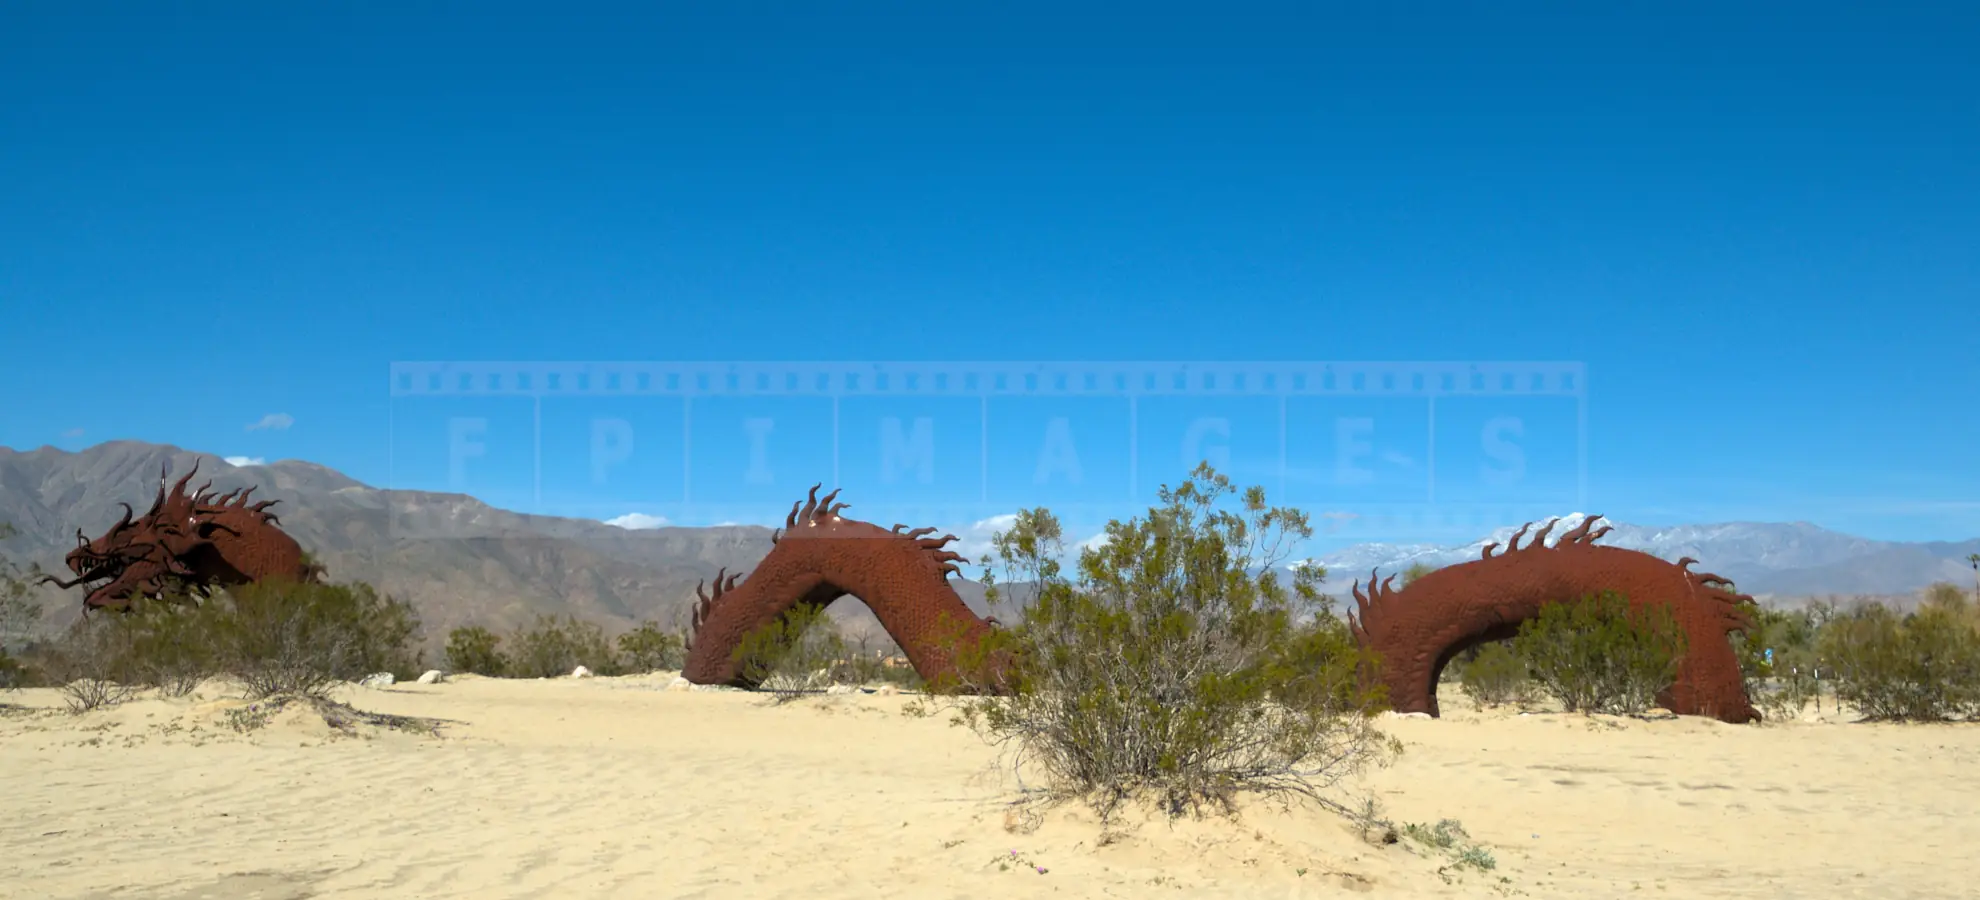 Sea Dragon metal sculpture rising from the desert sand Borrego Springs area, California